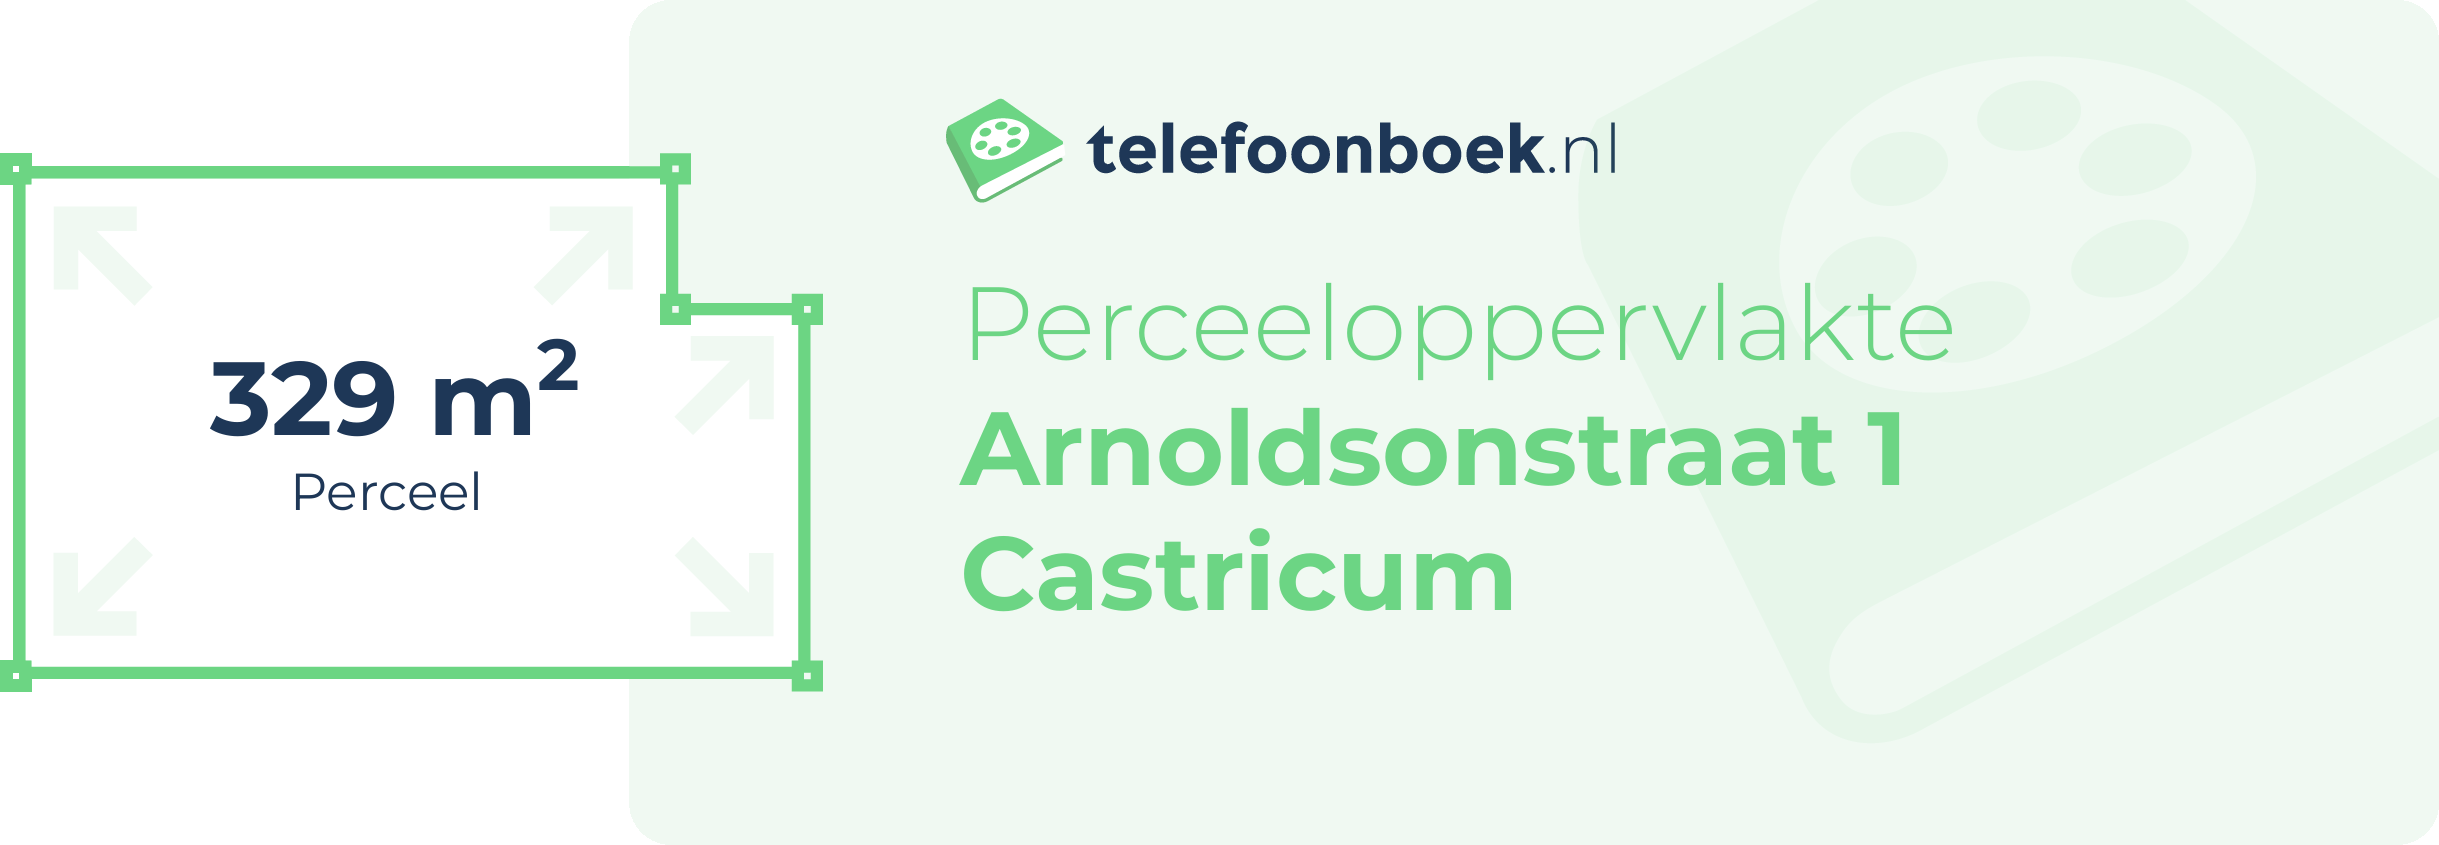 Perceeloppervlakte Arnoldsonstraat 1 Castricum